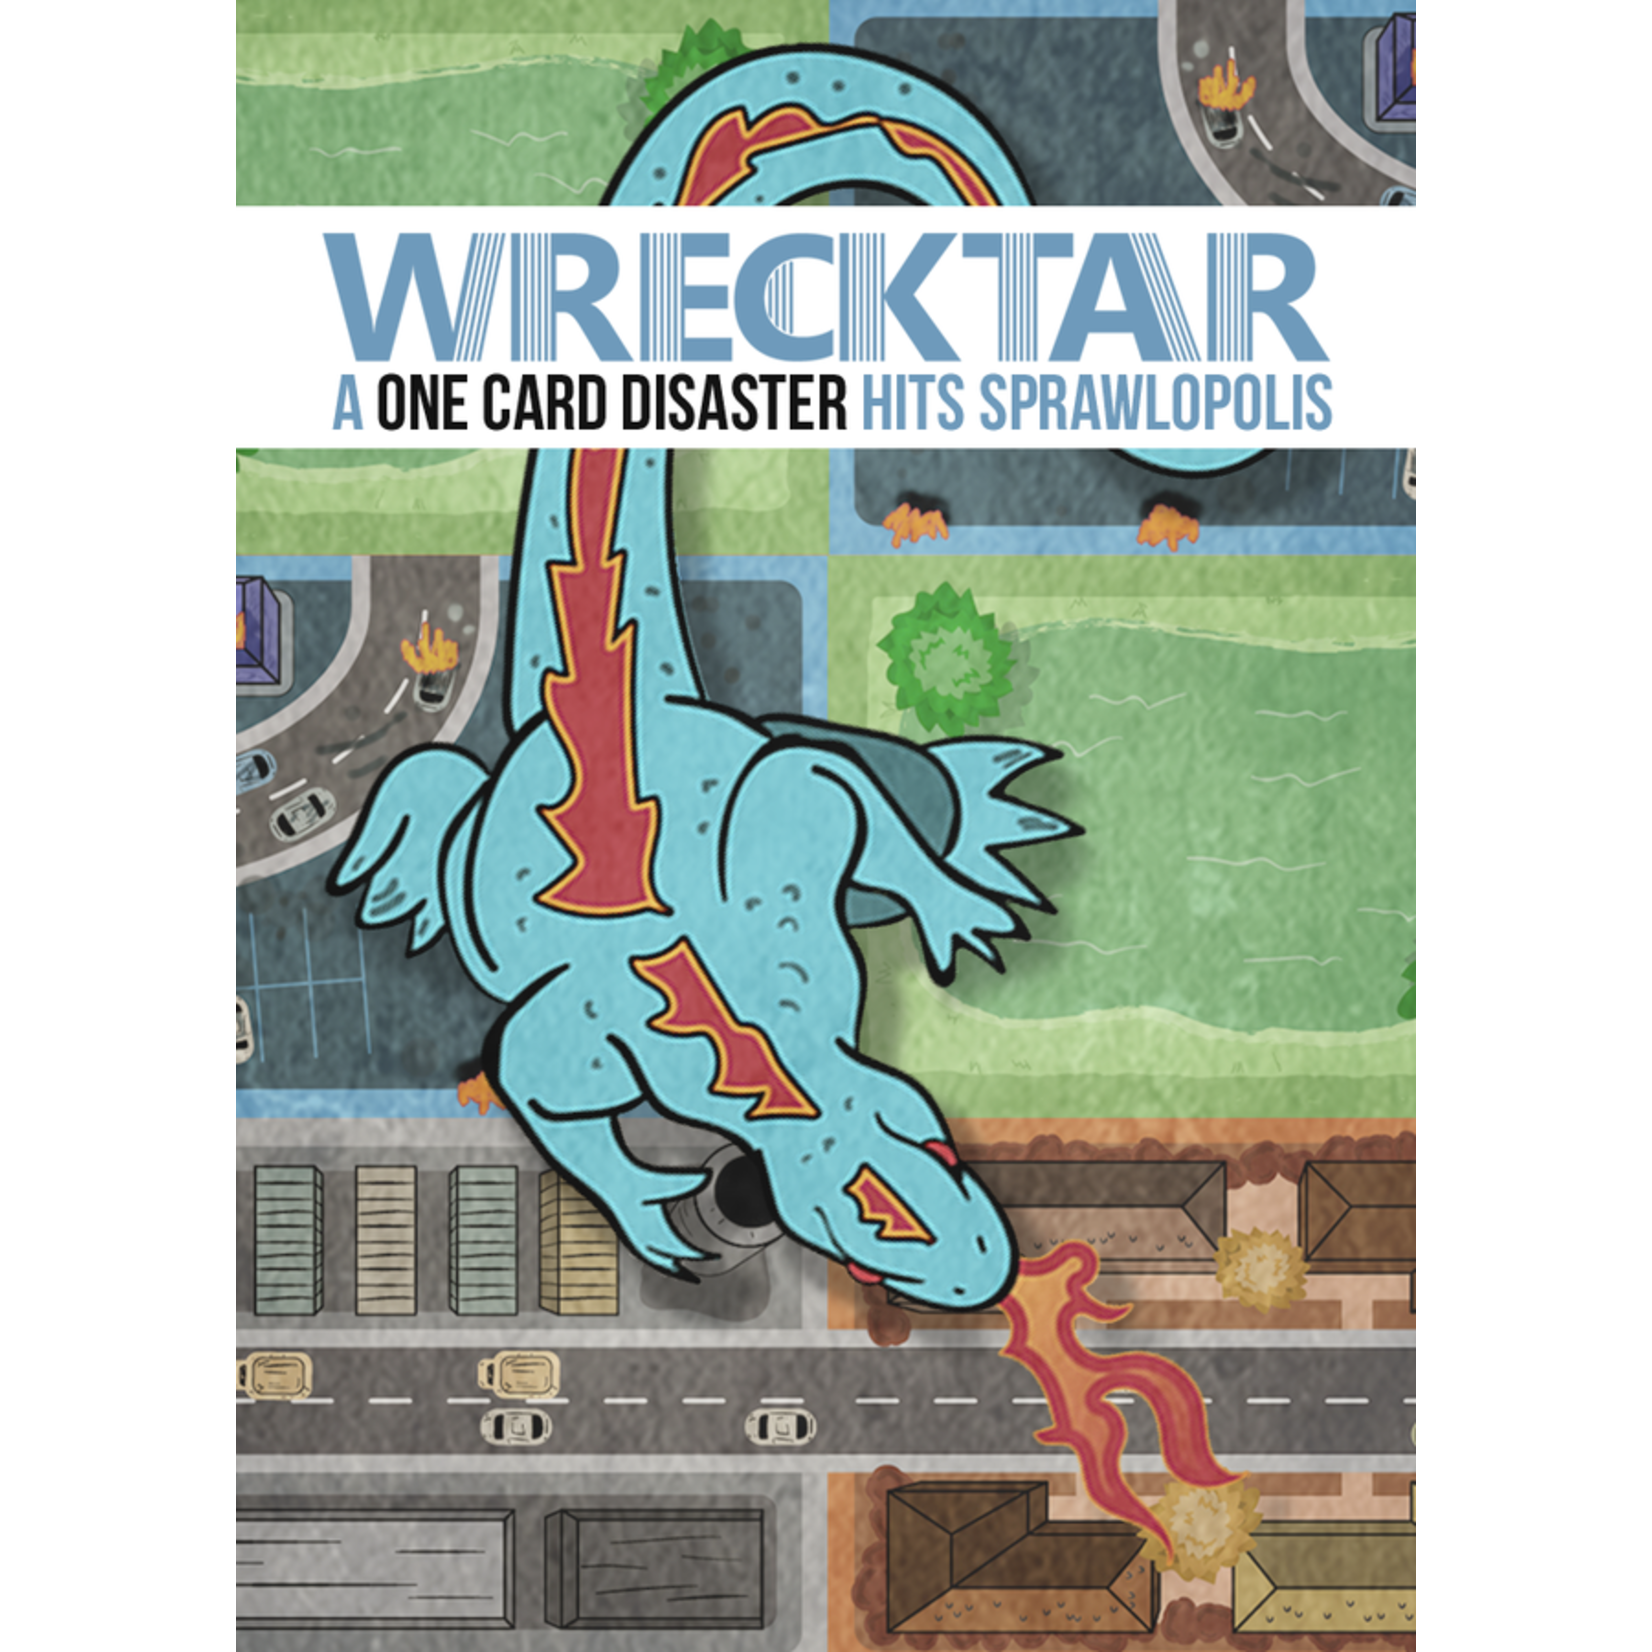 Button Shy Games Sprawlopolis: Wrecktar, A One Card Disaster Hits Sprawlopolis (Expansion)